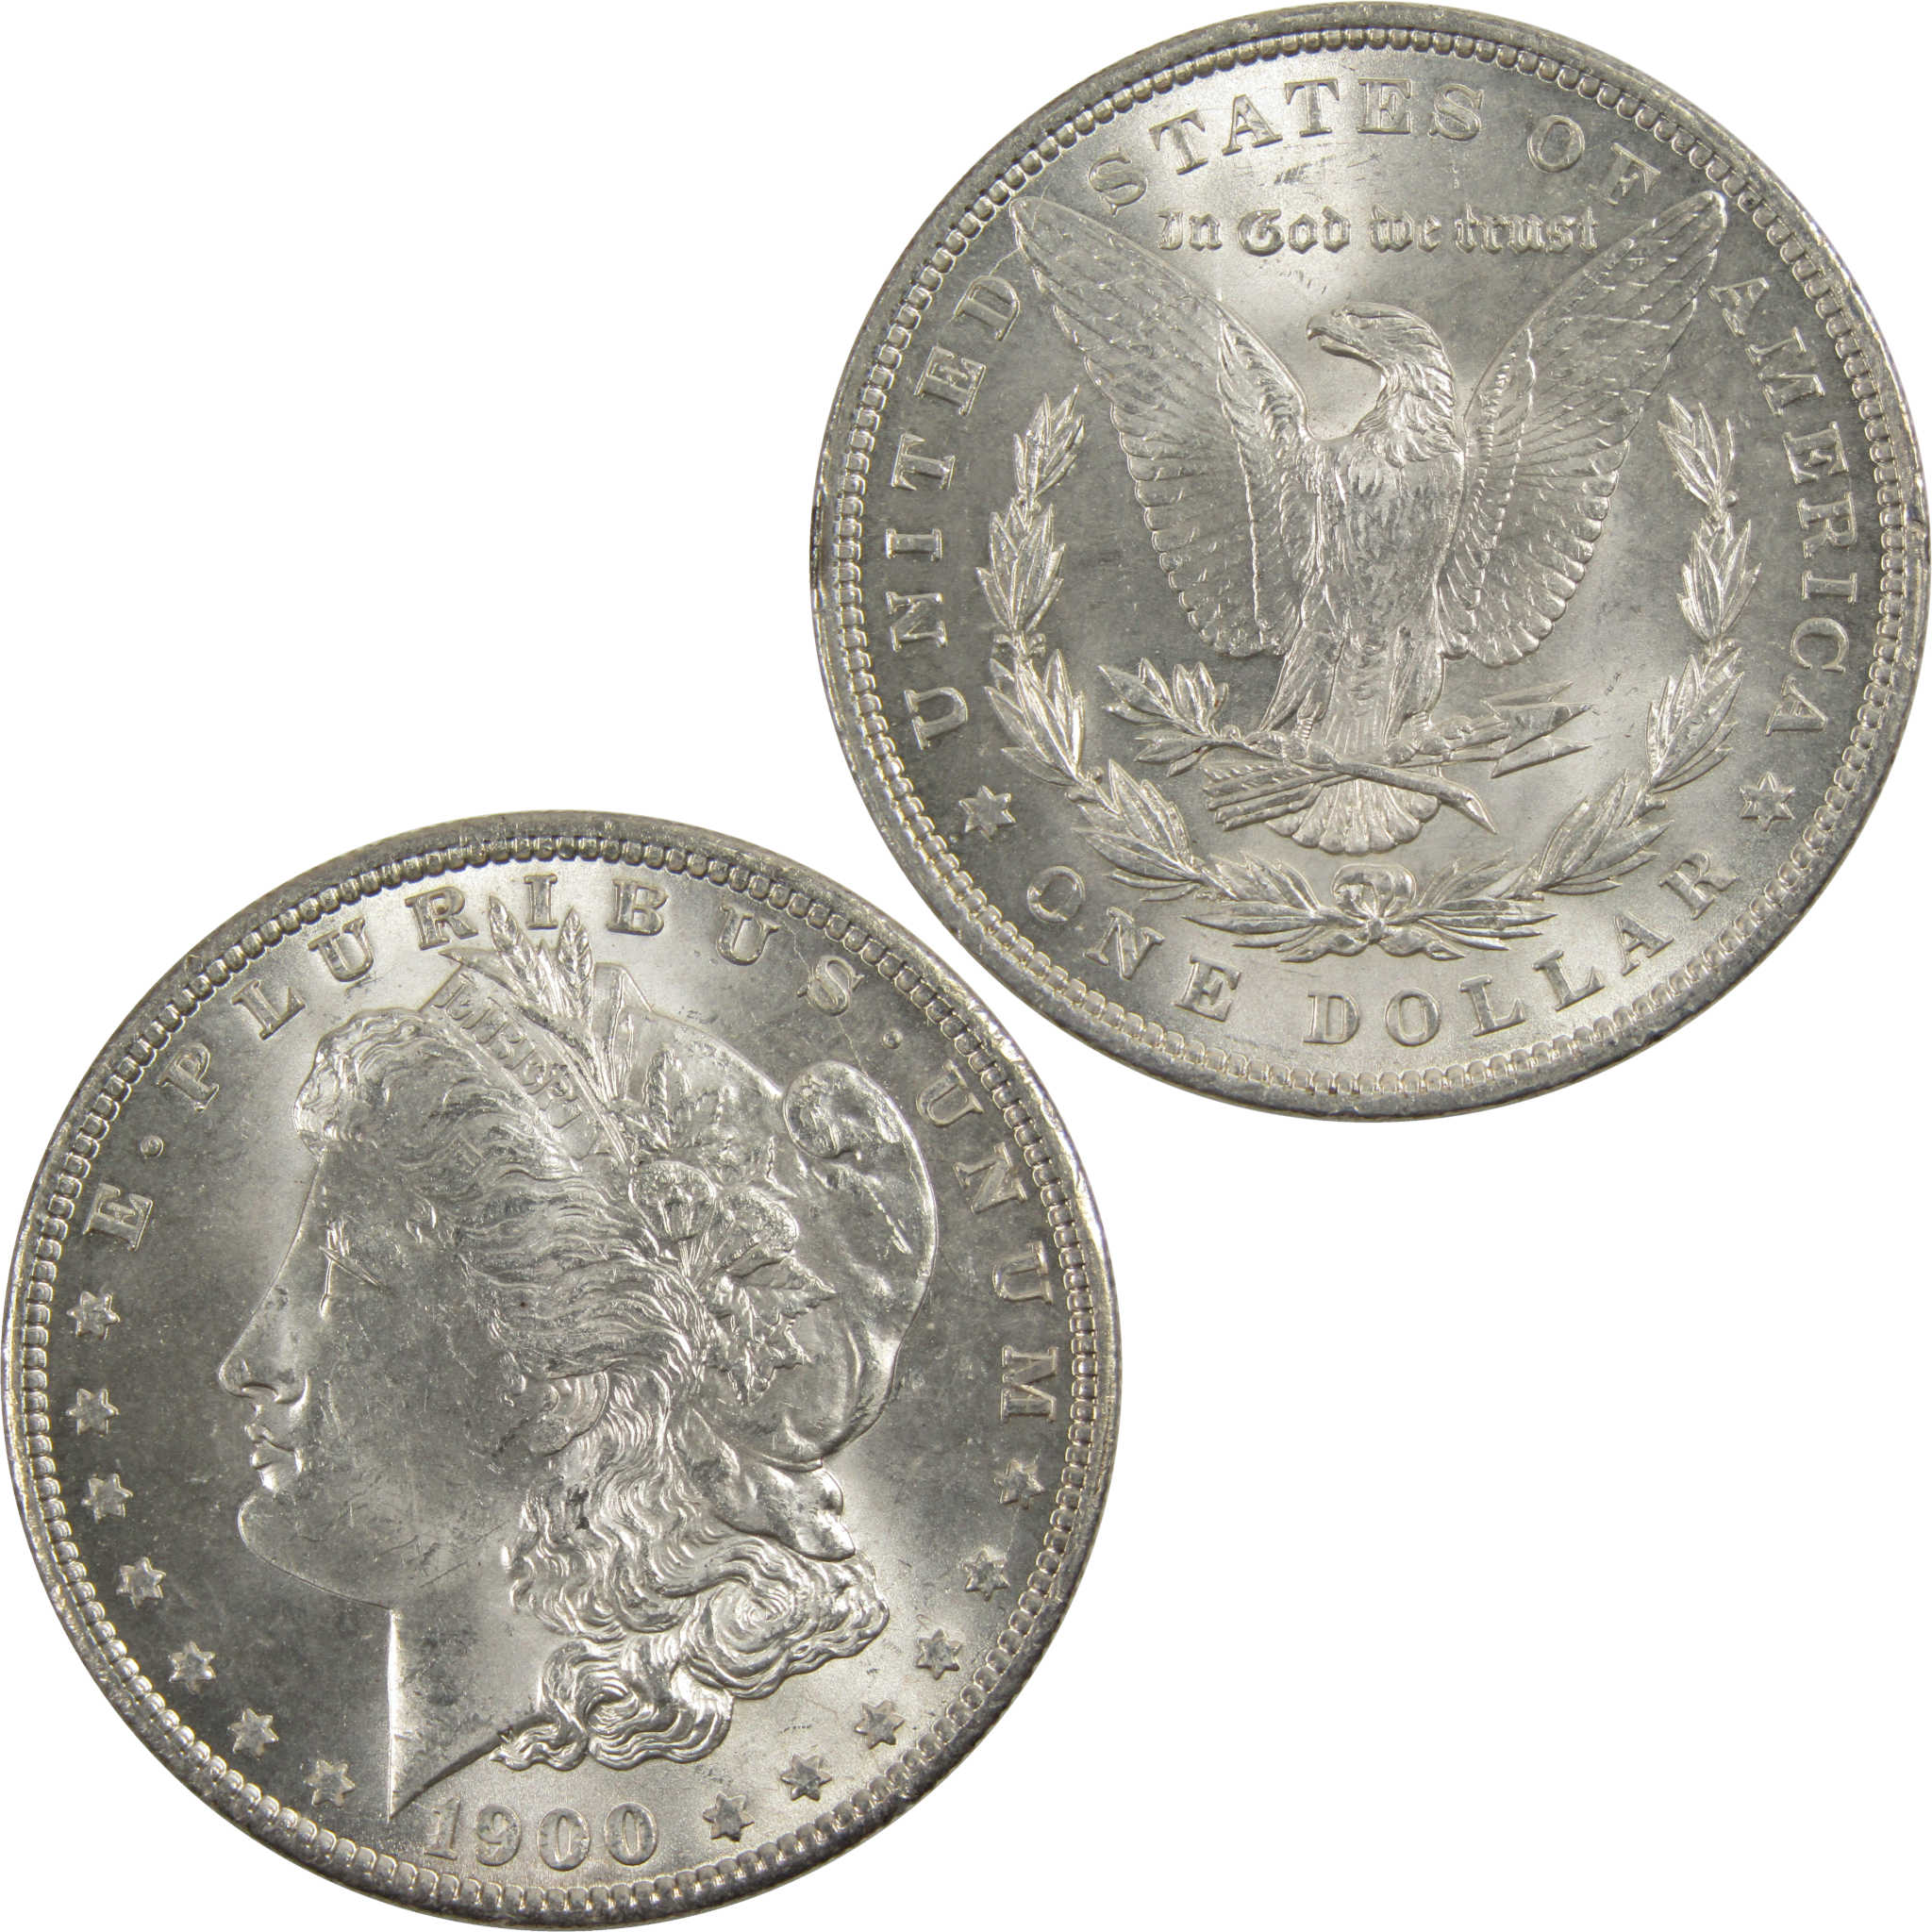 1900 Morgan Dollar BU Choice Uncirculated 90% Silver $1 Coin SKU:I8118 - Morgan coin - Morgan silver dollar - Morgan silver dollar for sale - Profile Coins &amp; Collectibles